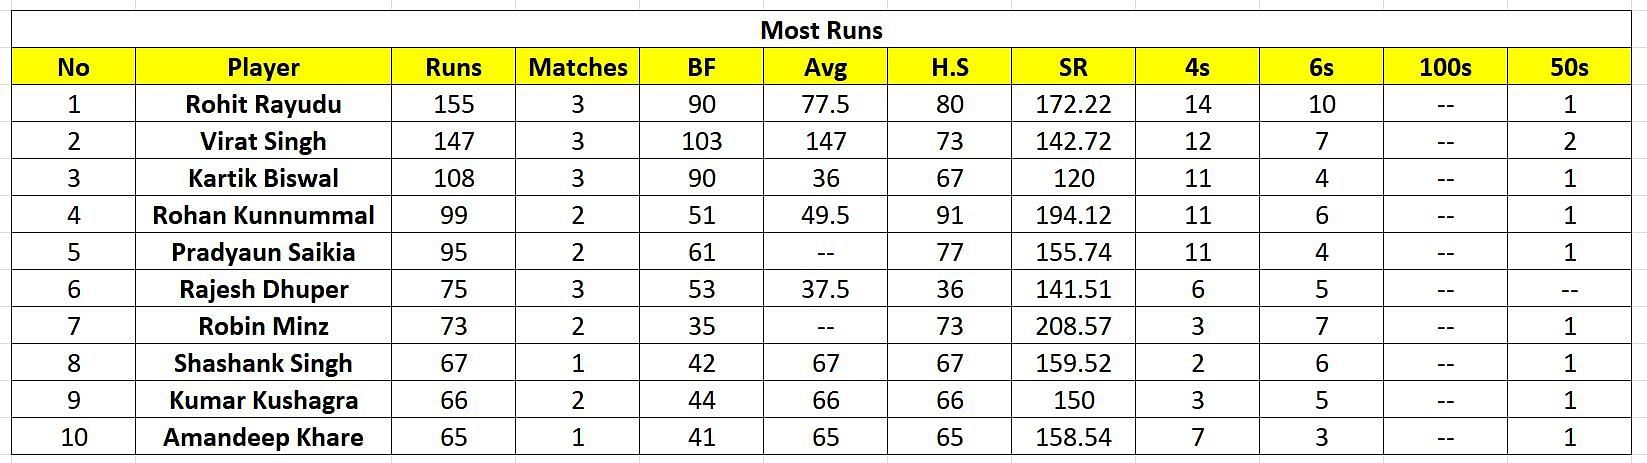 Bhairab Chandra Mohanty Memorial Tournament 2023 Most Runs